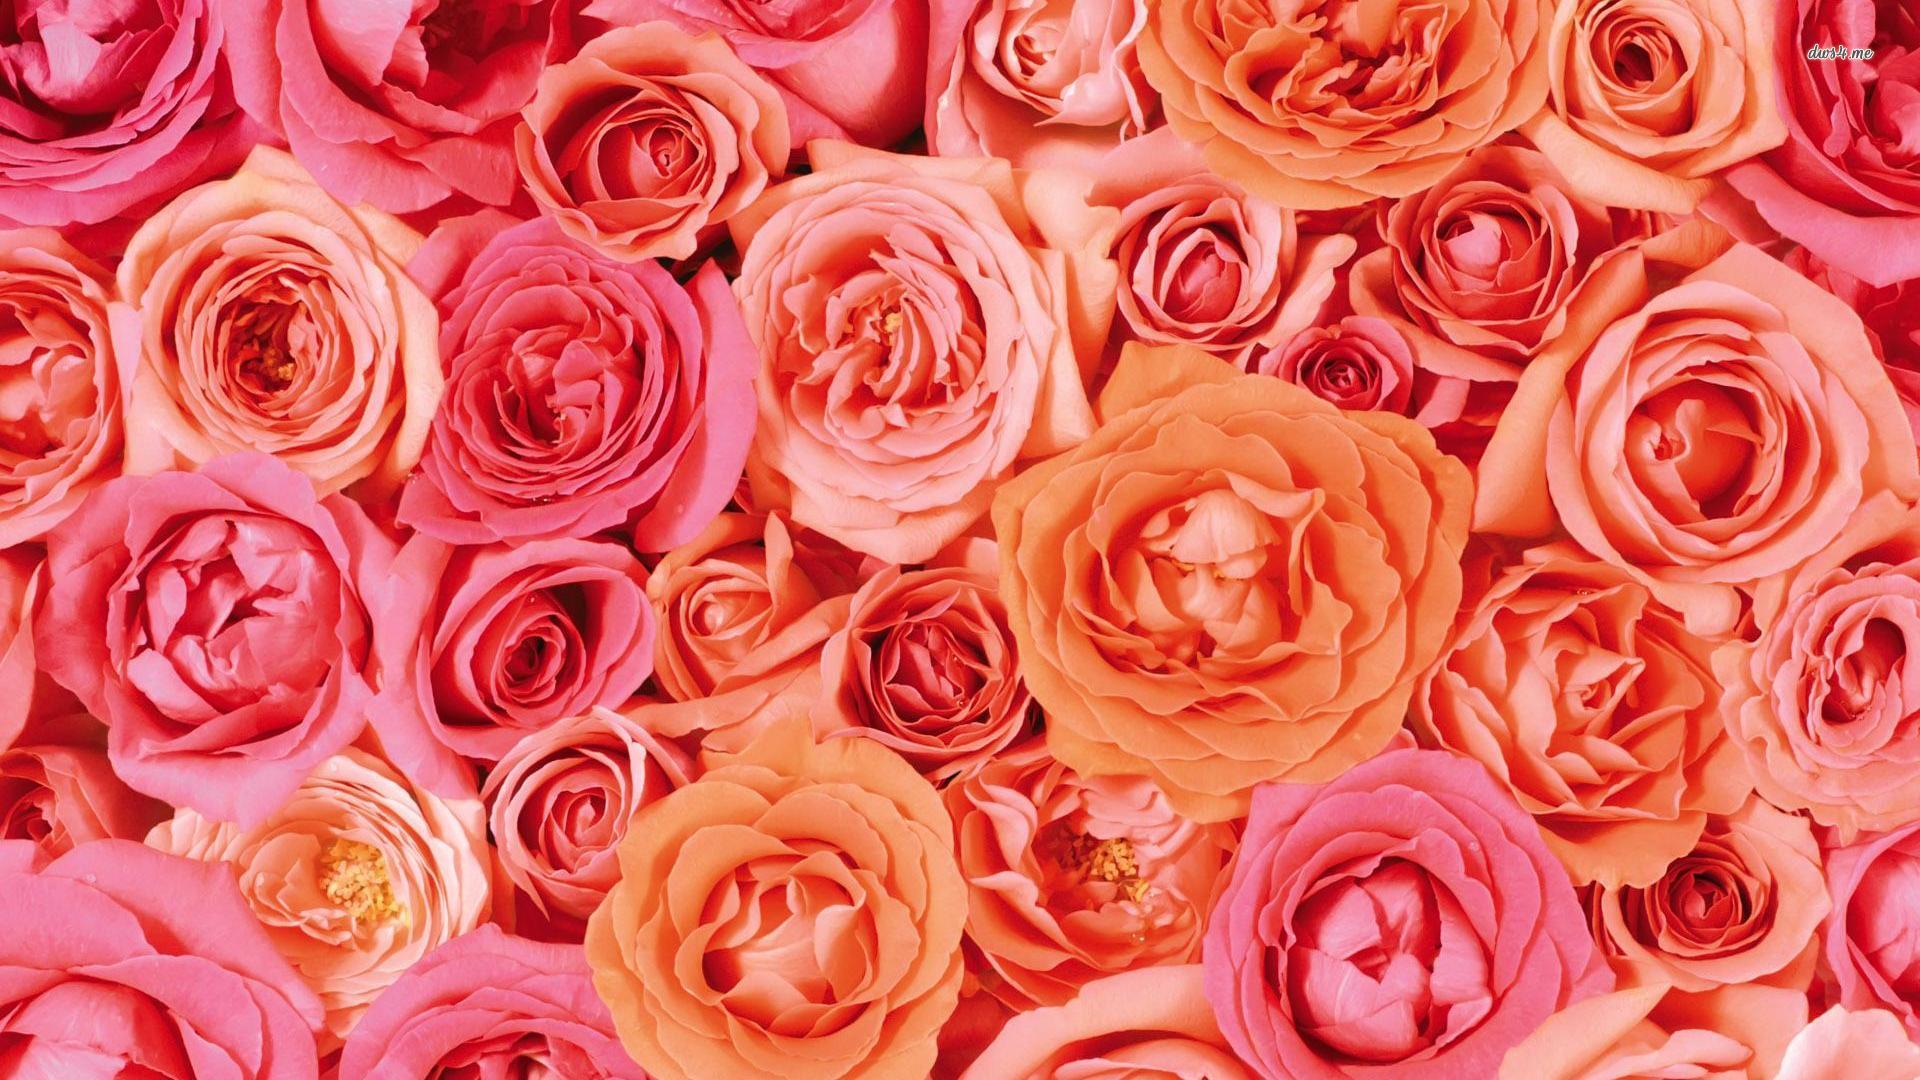 Pink and orange roses wallpaper wallpaper